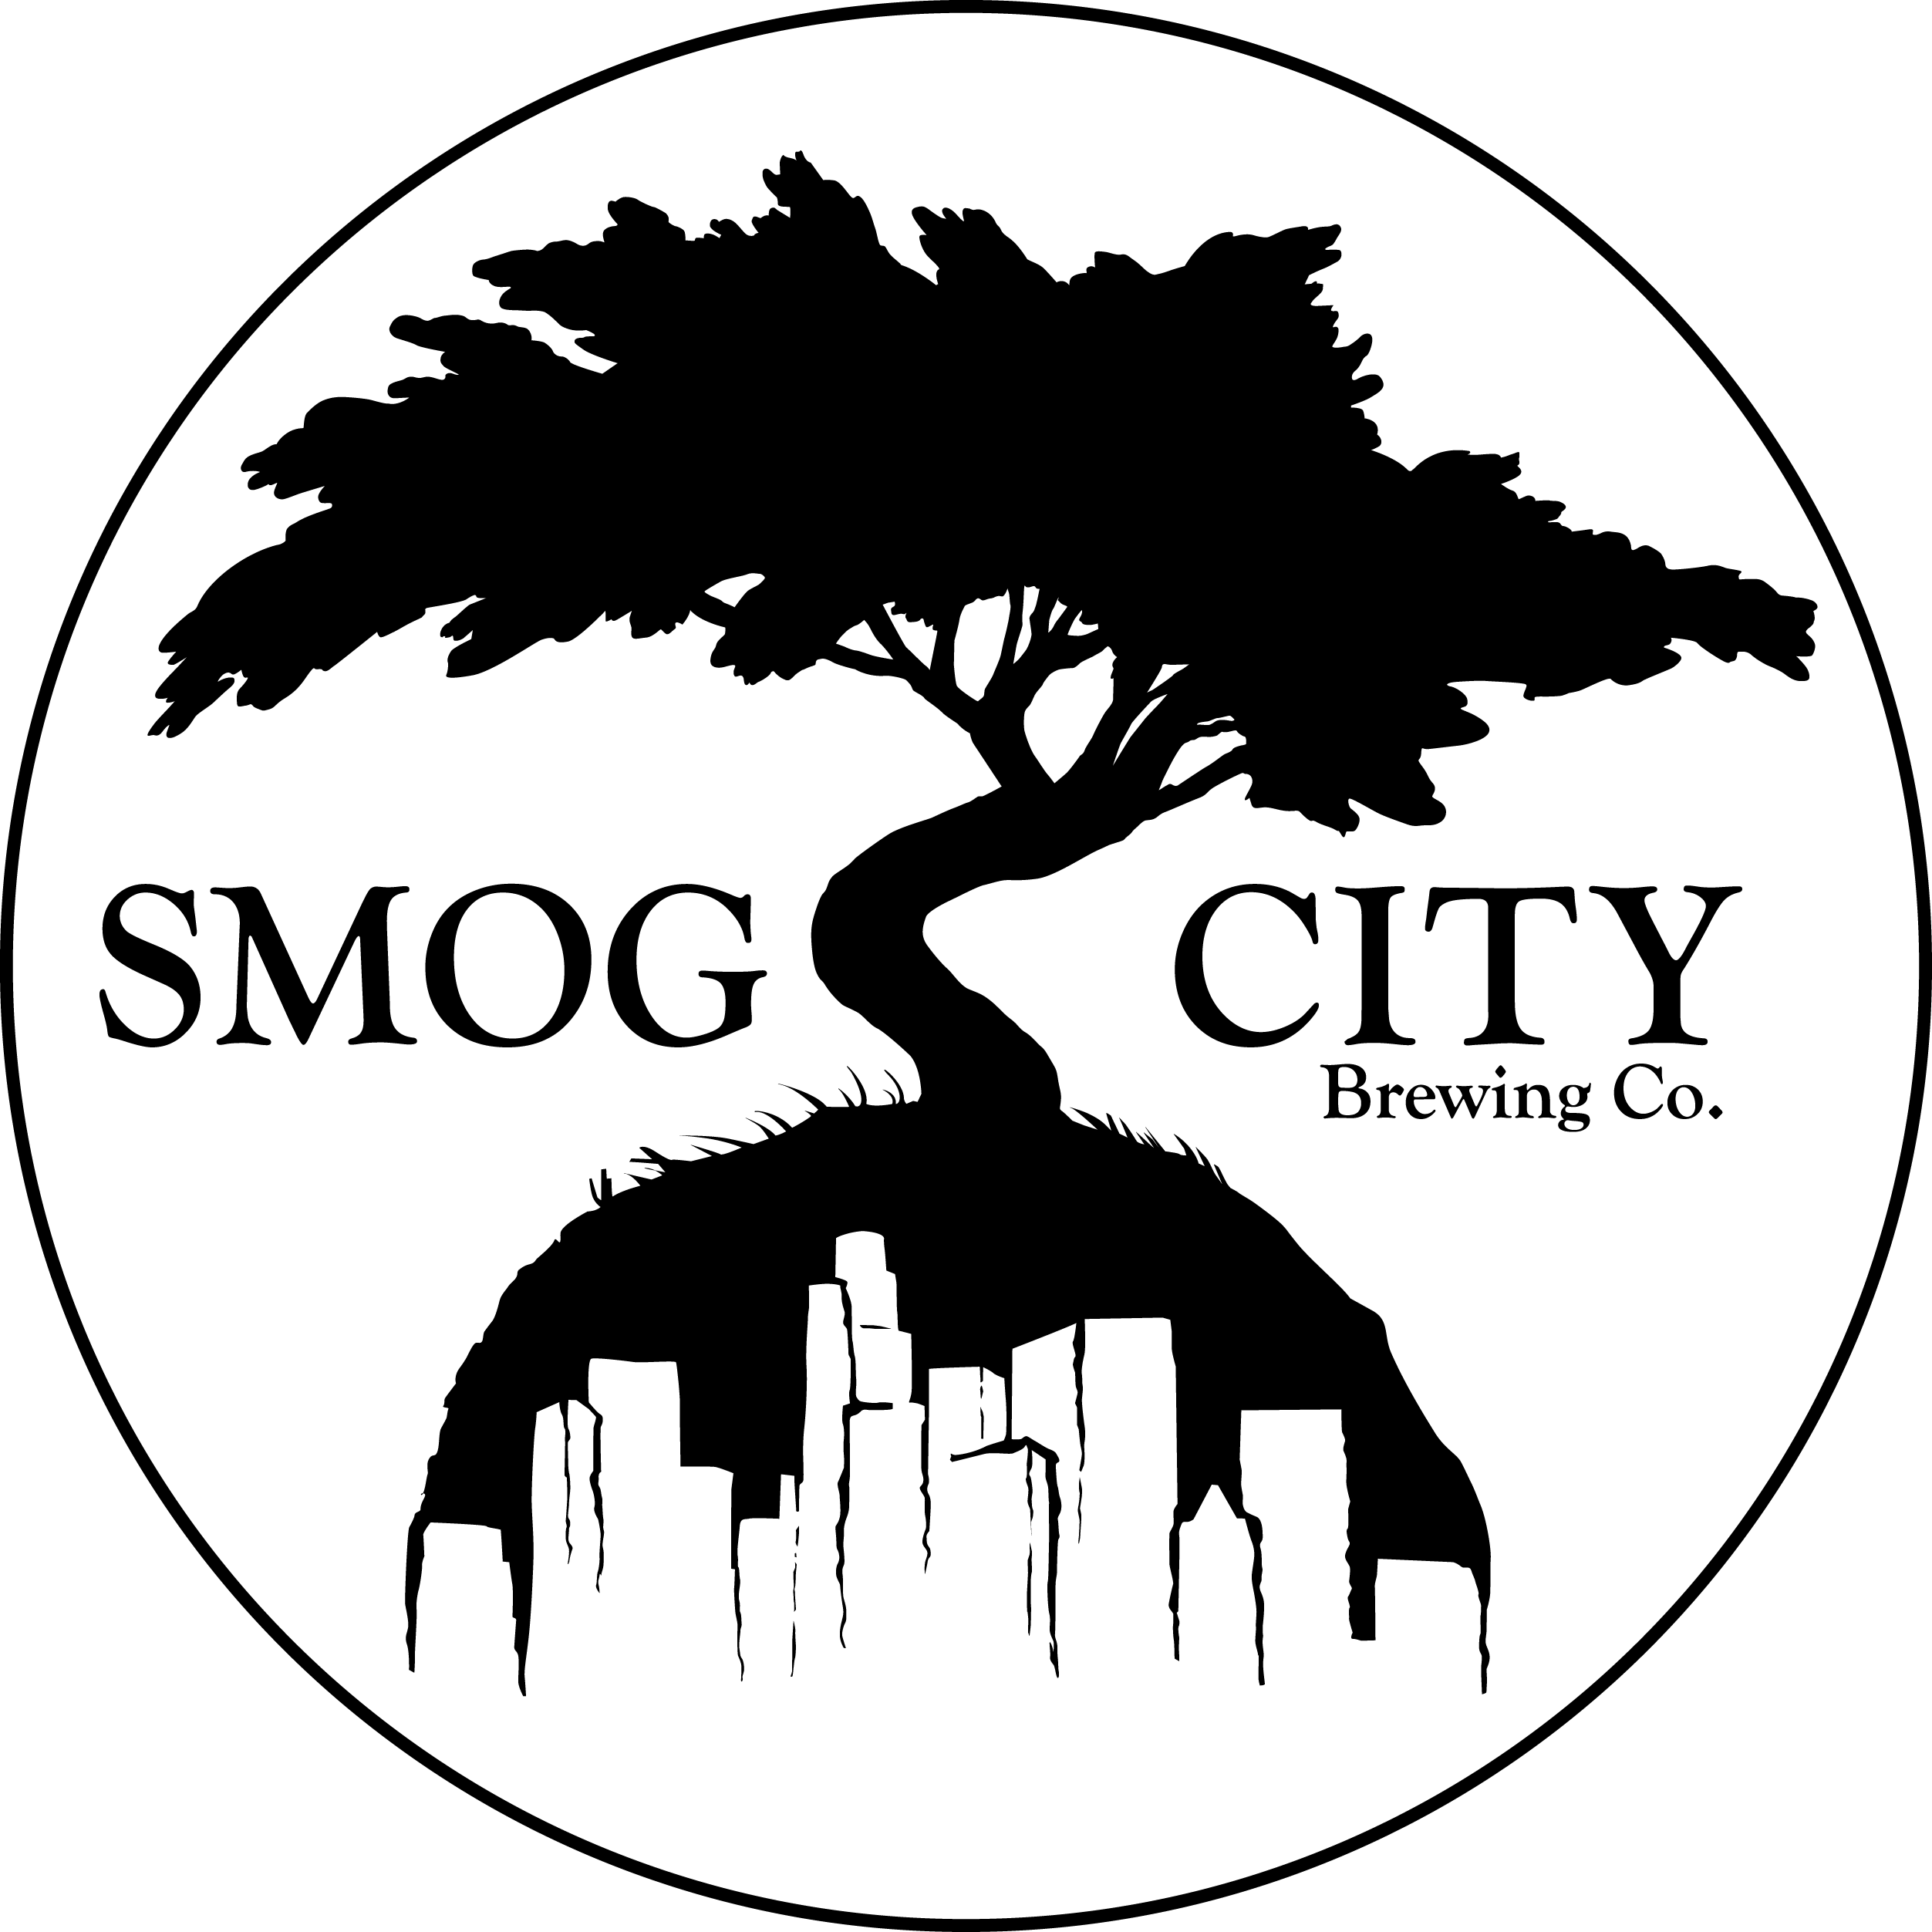 Smog City Brewing Company